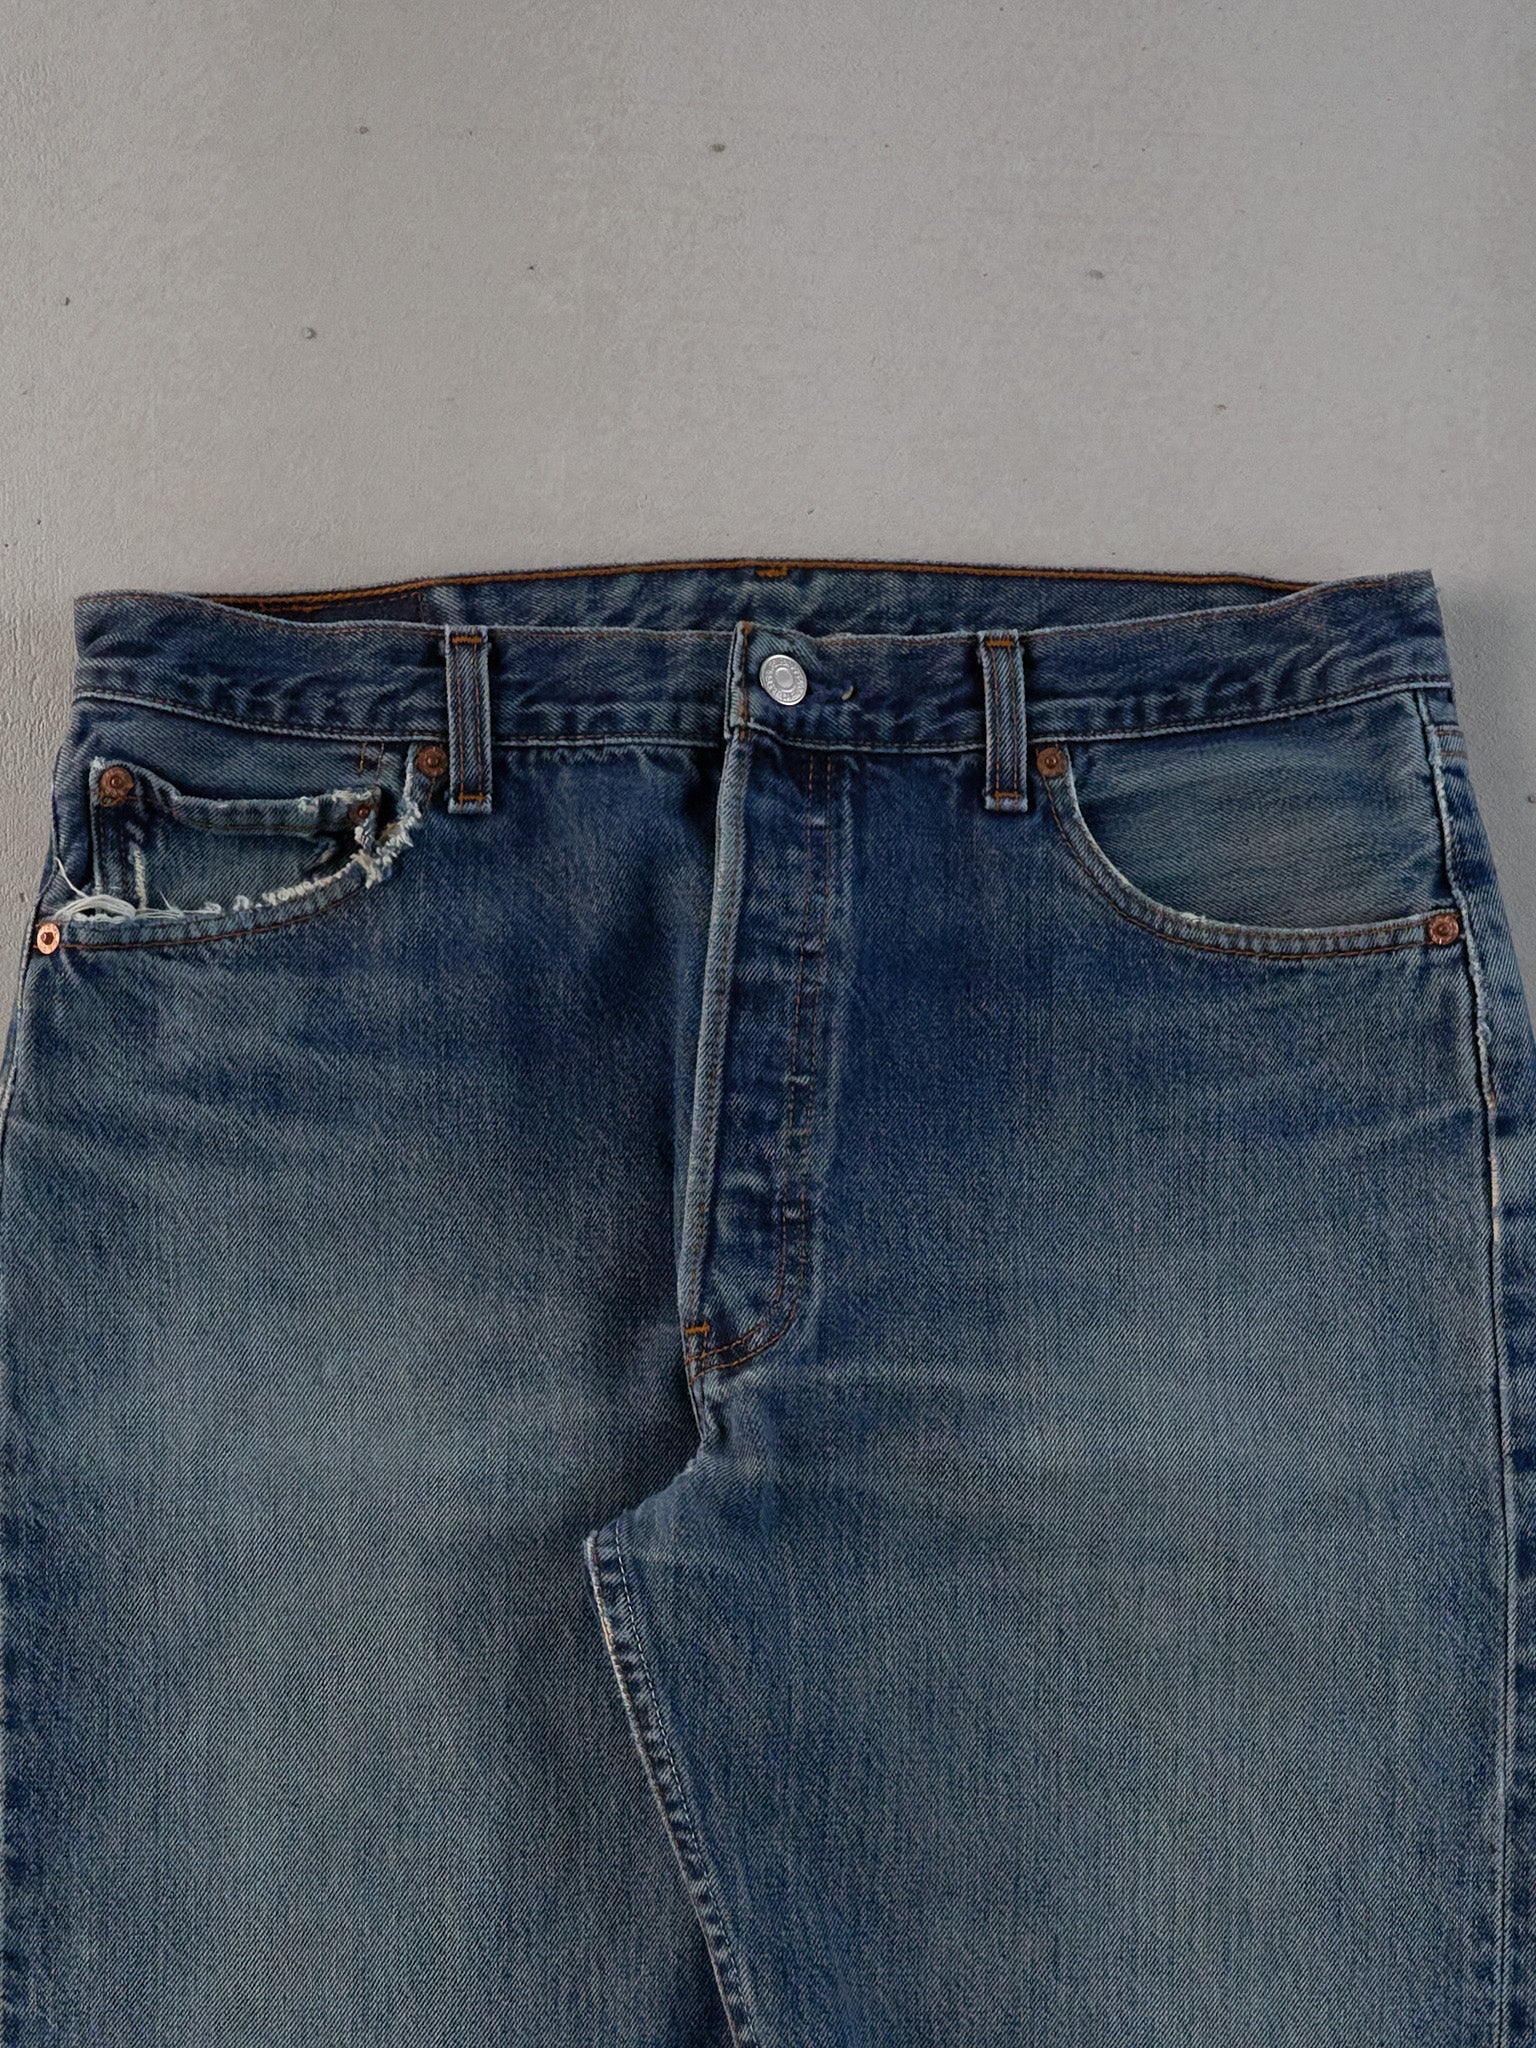 Vintage 90s Dark Blue Levi's 501 Denim Jeans (34x31)